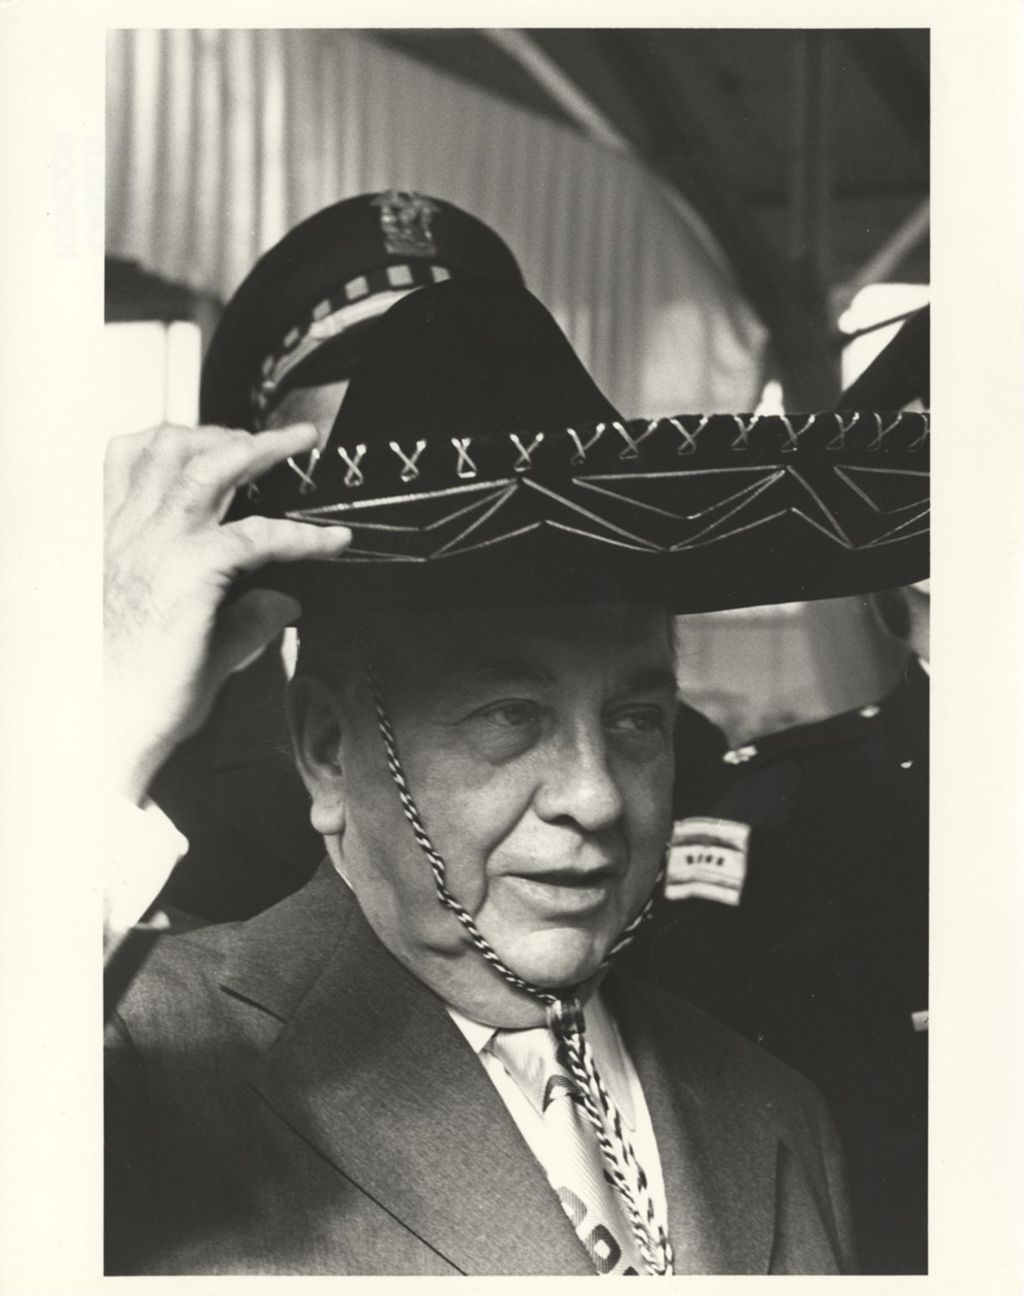 Miniature of Richard J. Daley wearing a sombrero